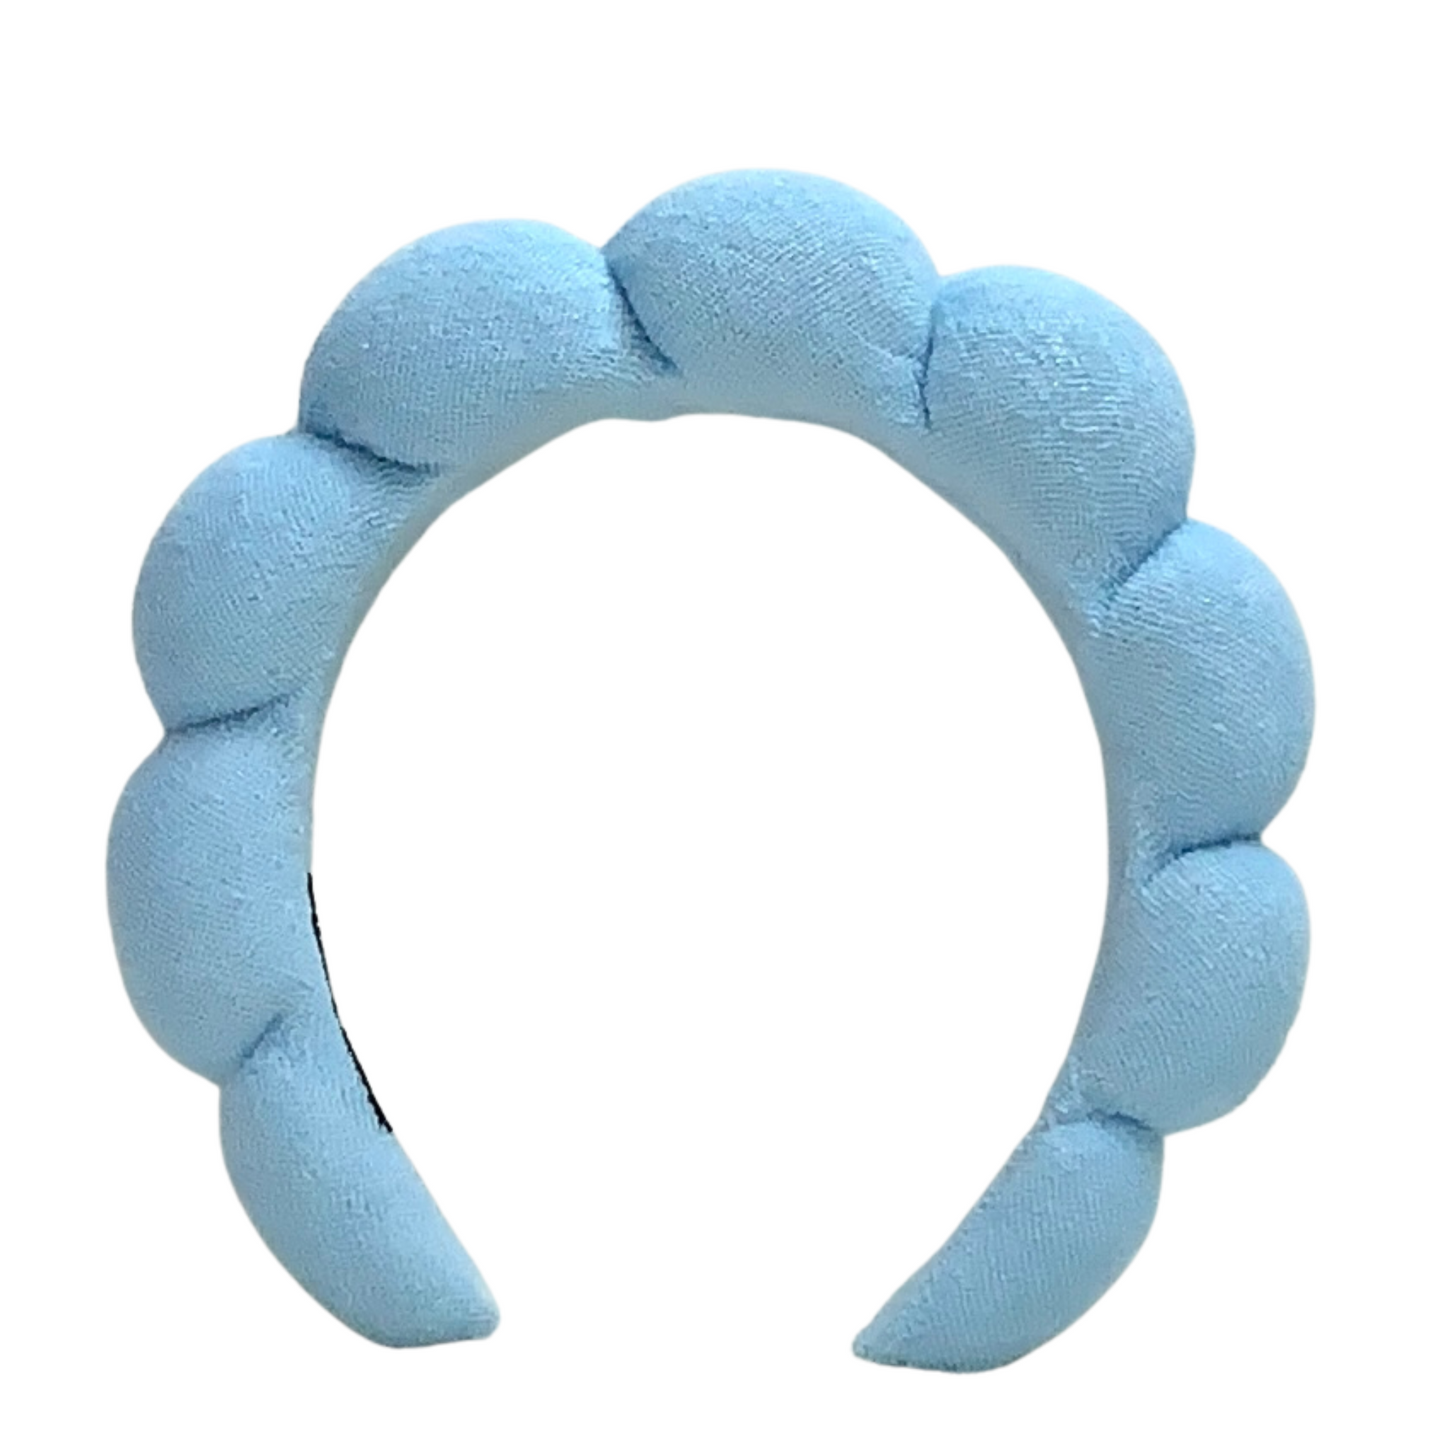 Soft sponge padded SPA headband (blue)